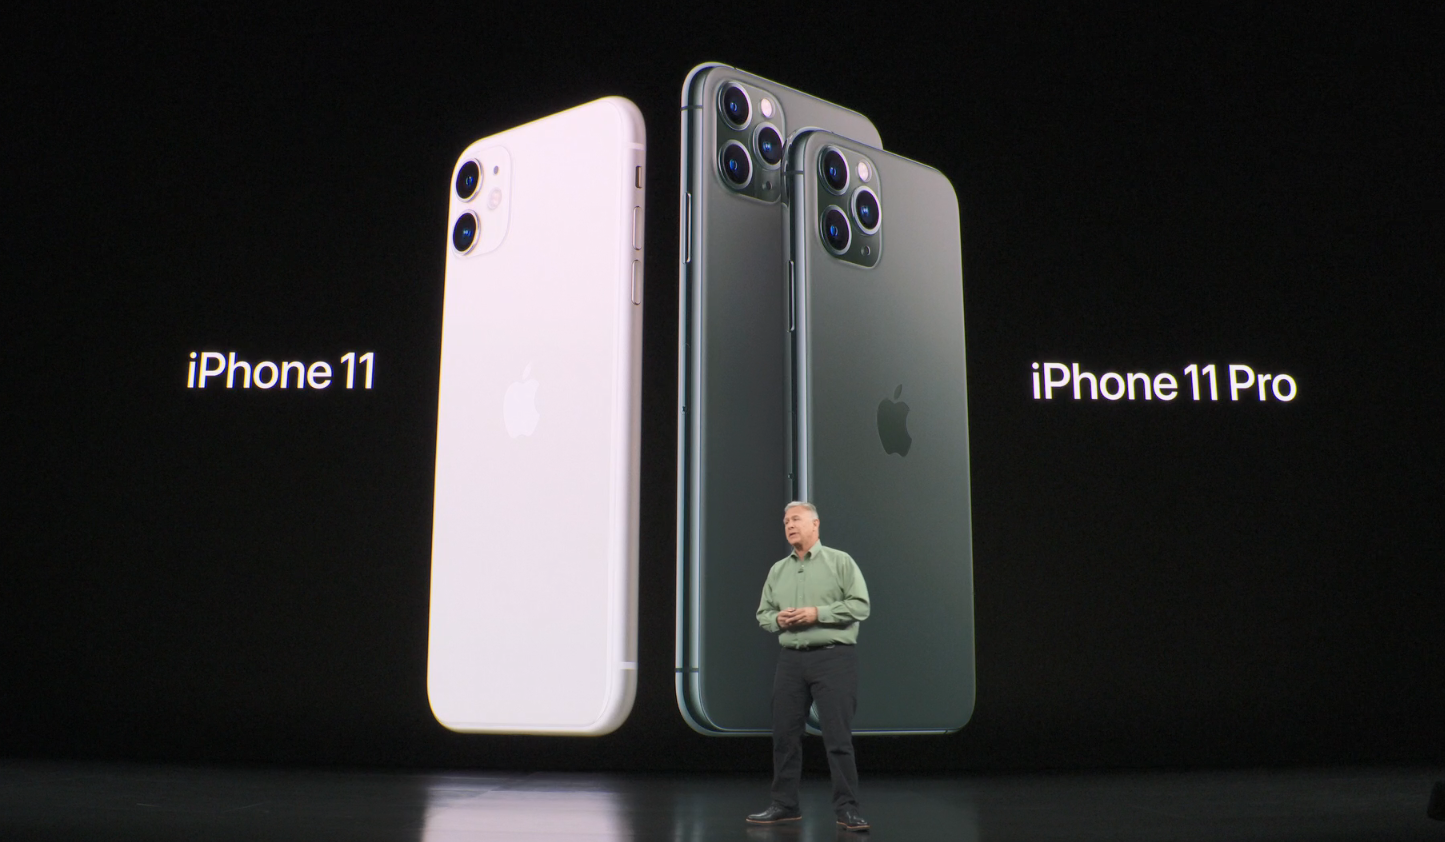  Tiga iPhone baru terungkap selama acara berlangsung